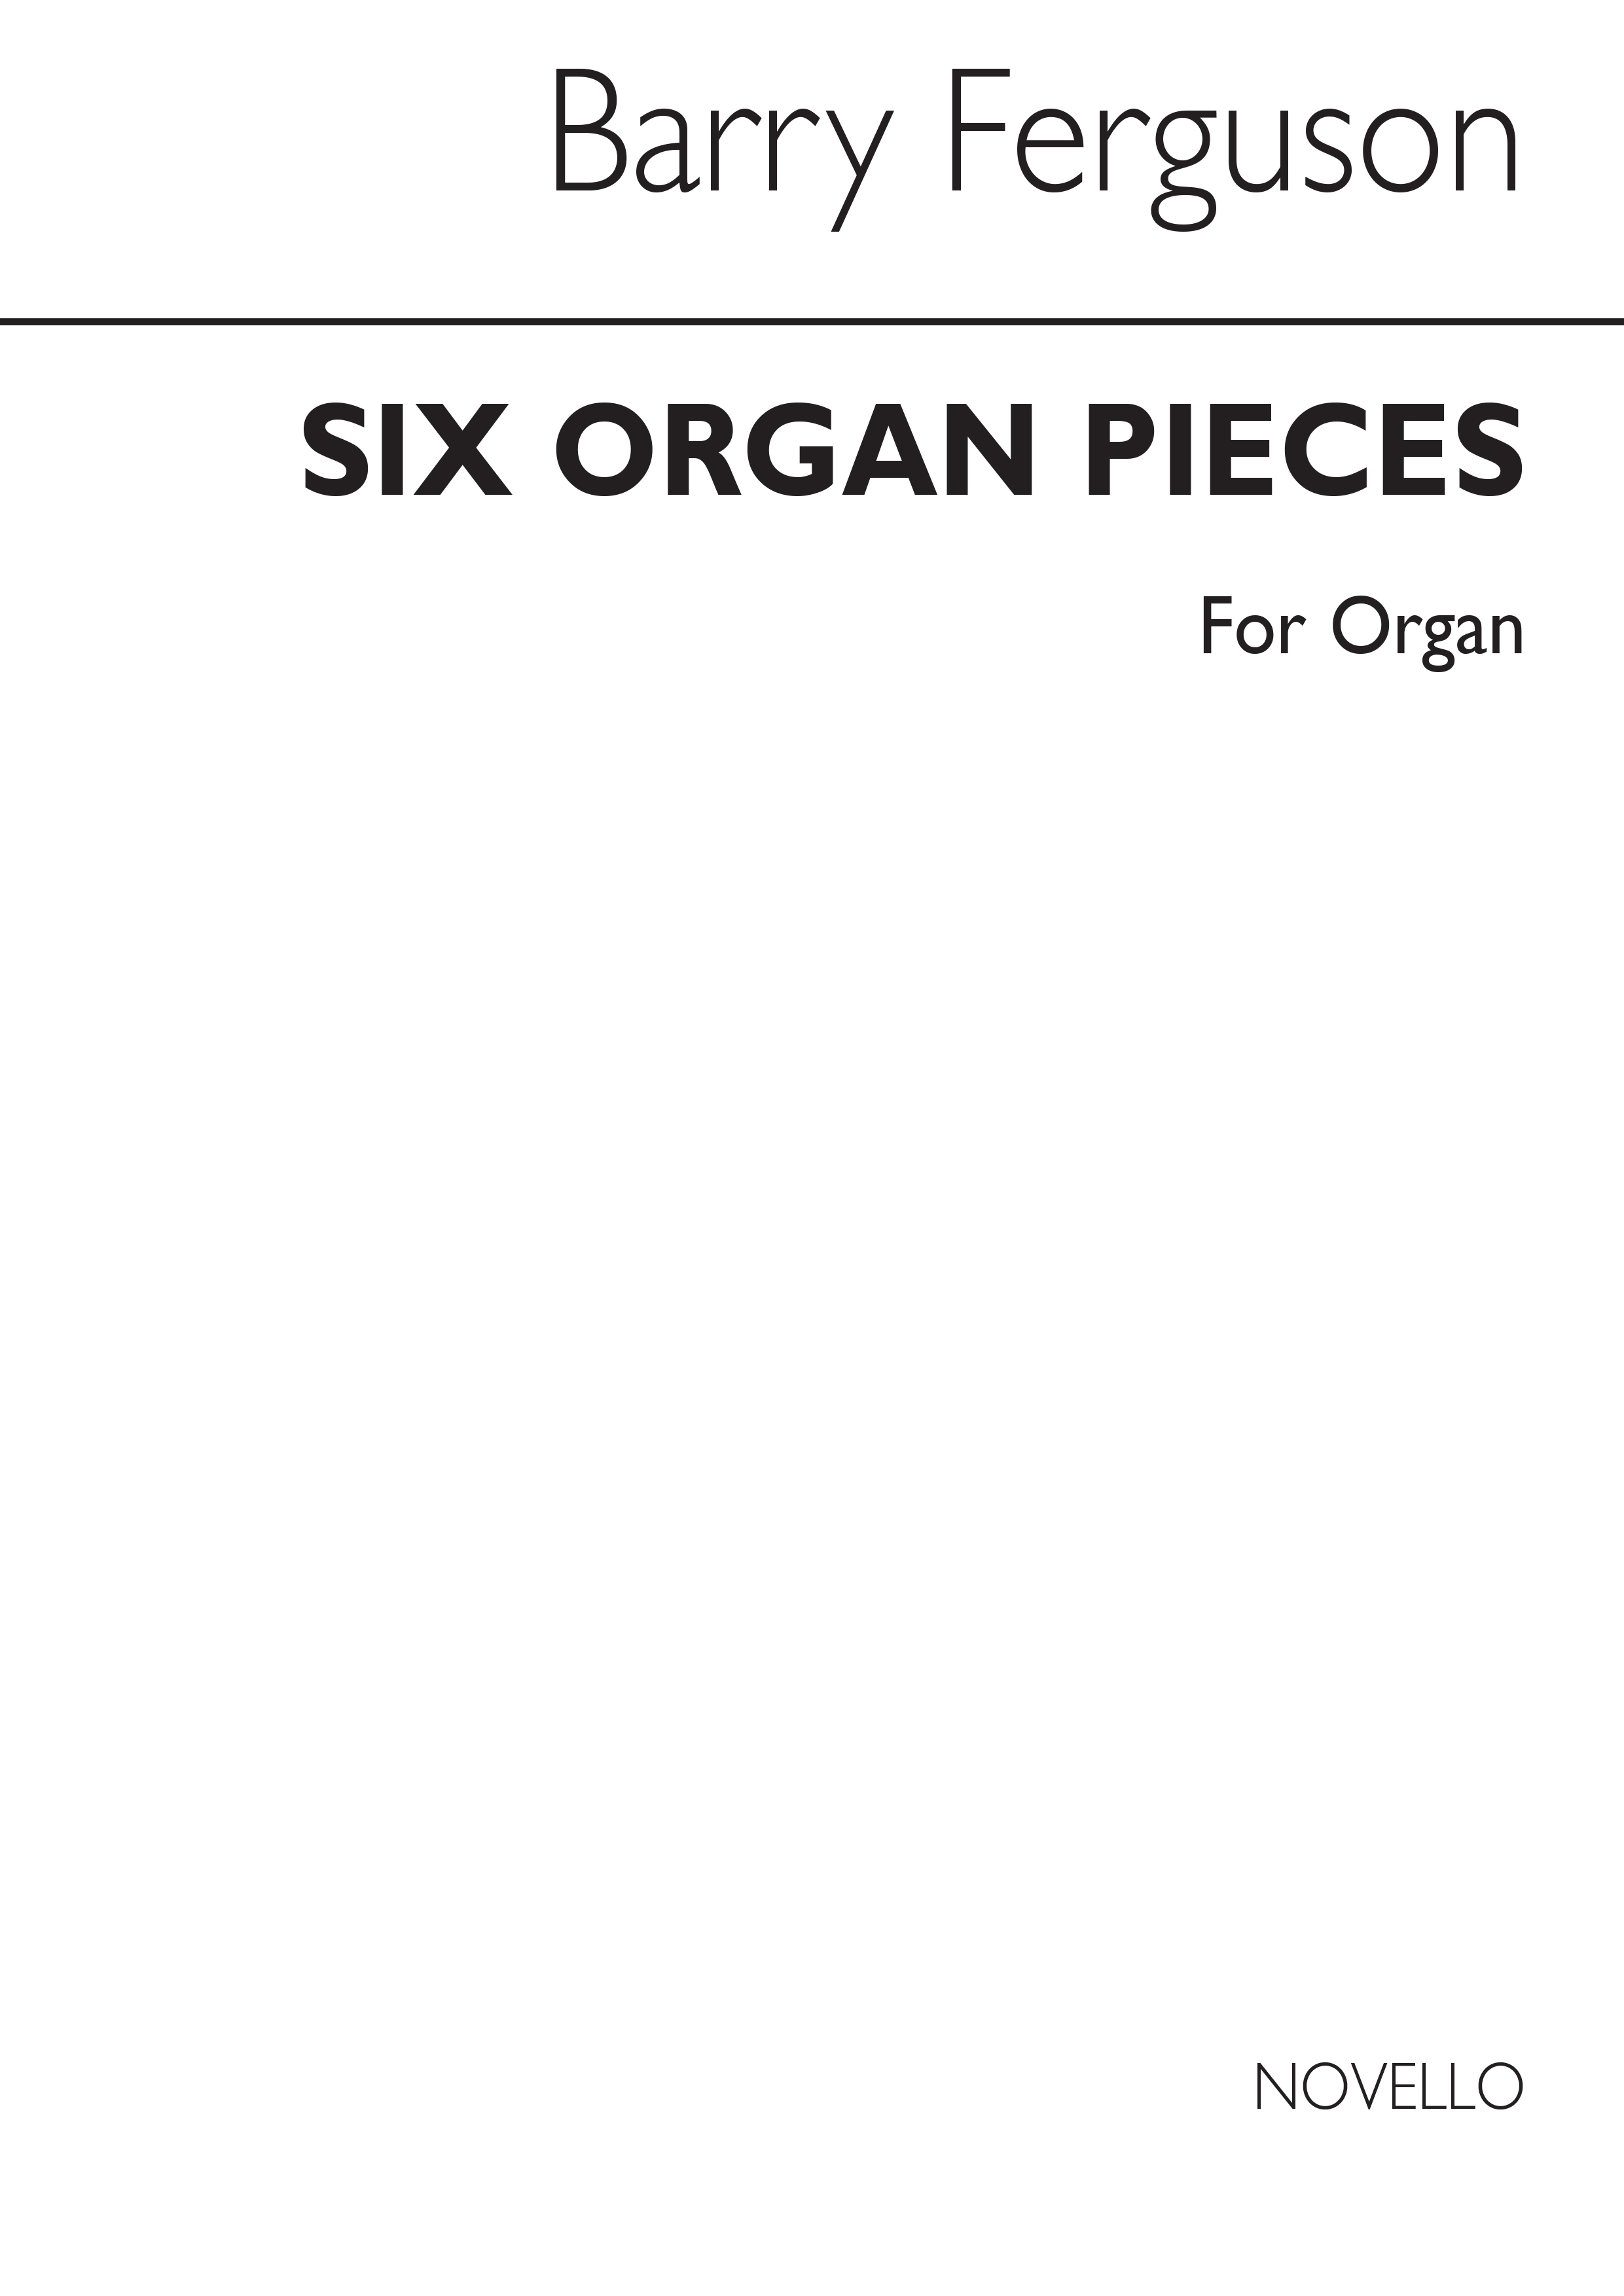 Barry Ferguson: Six Pieces For Organ